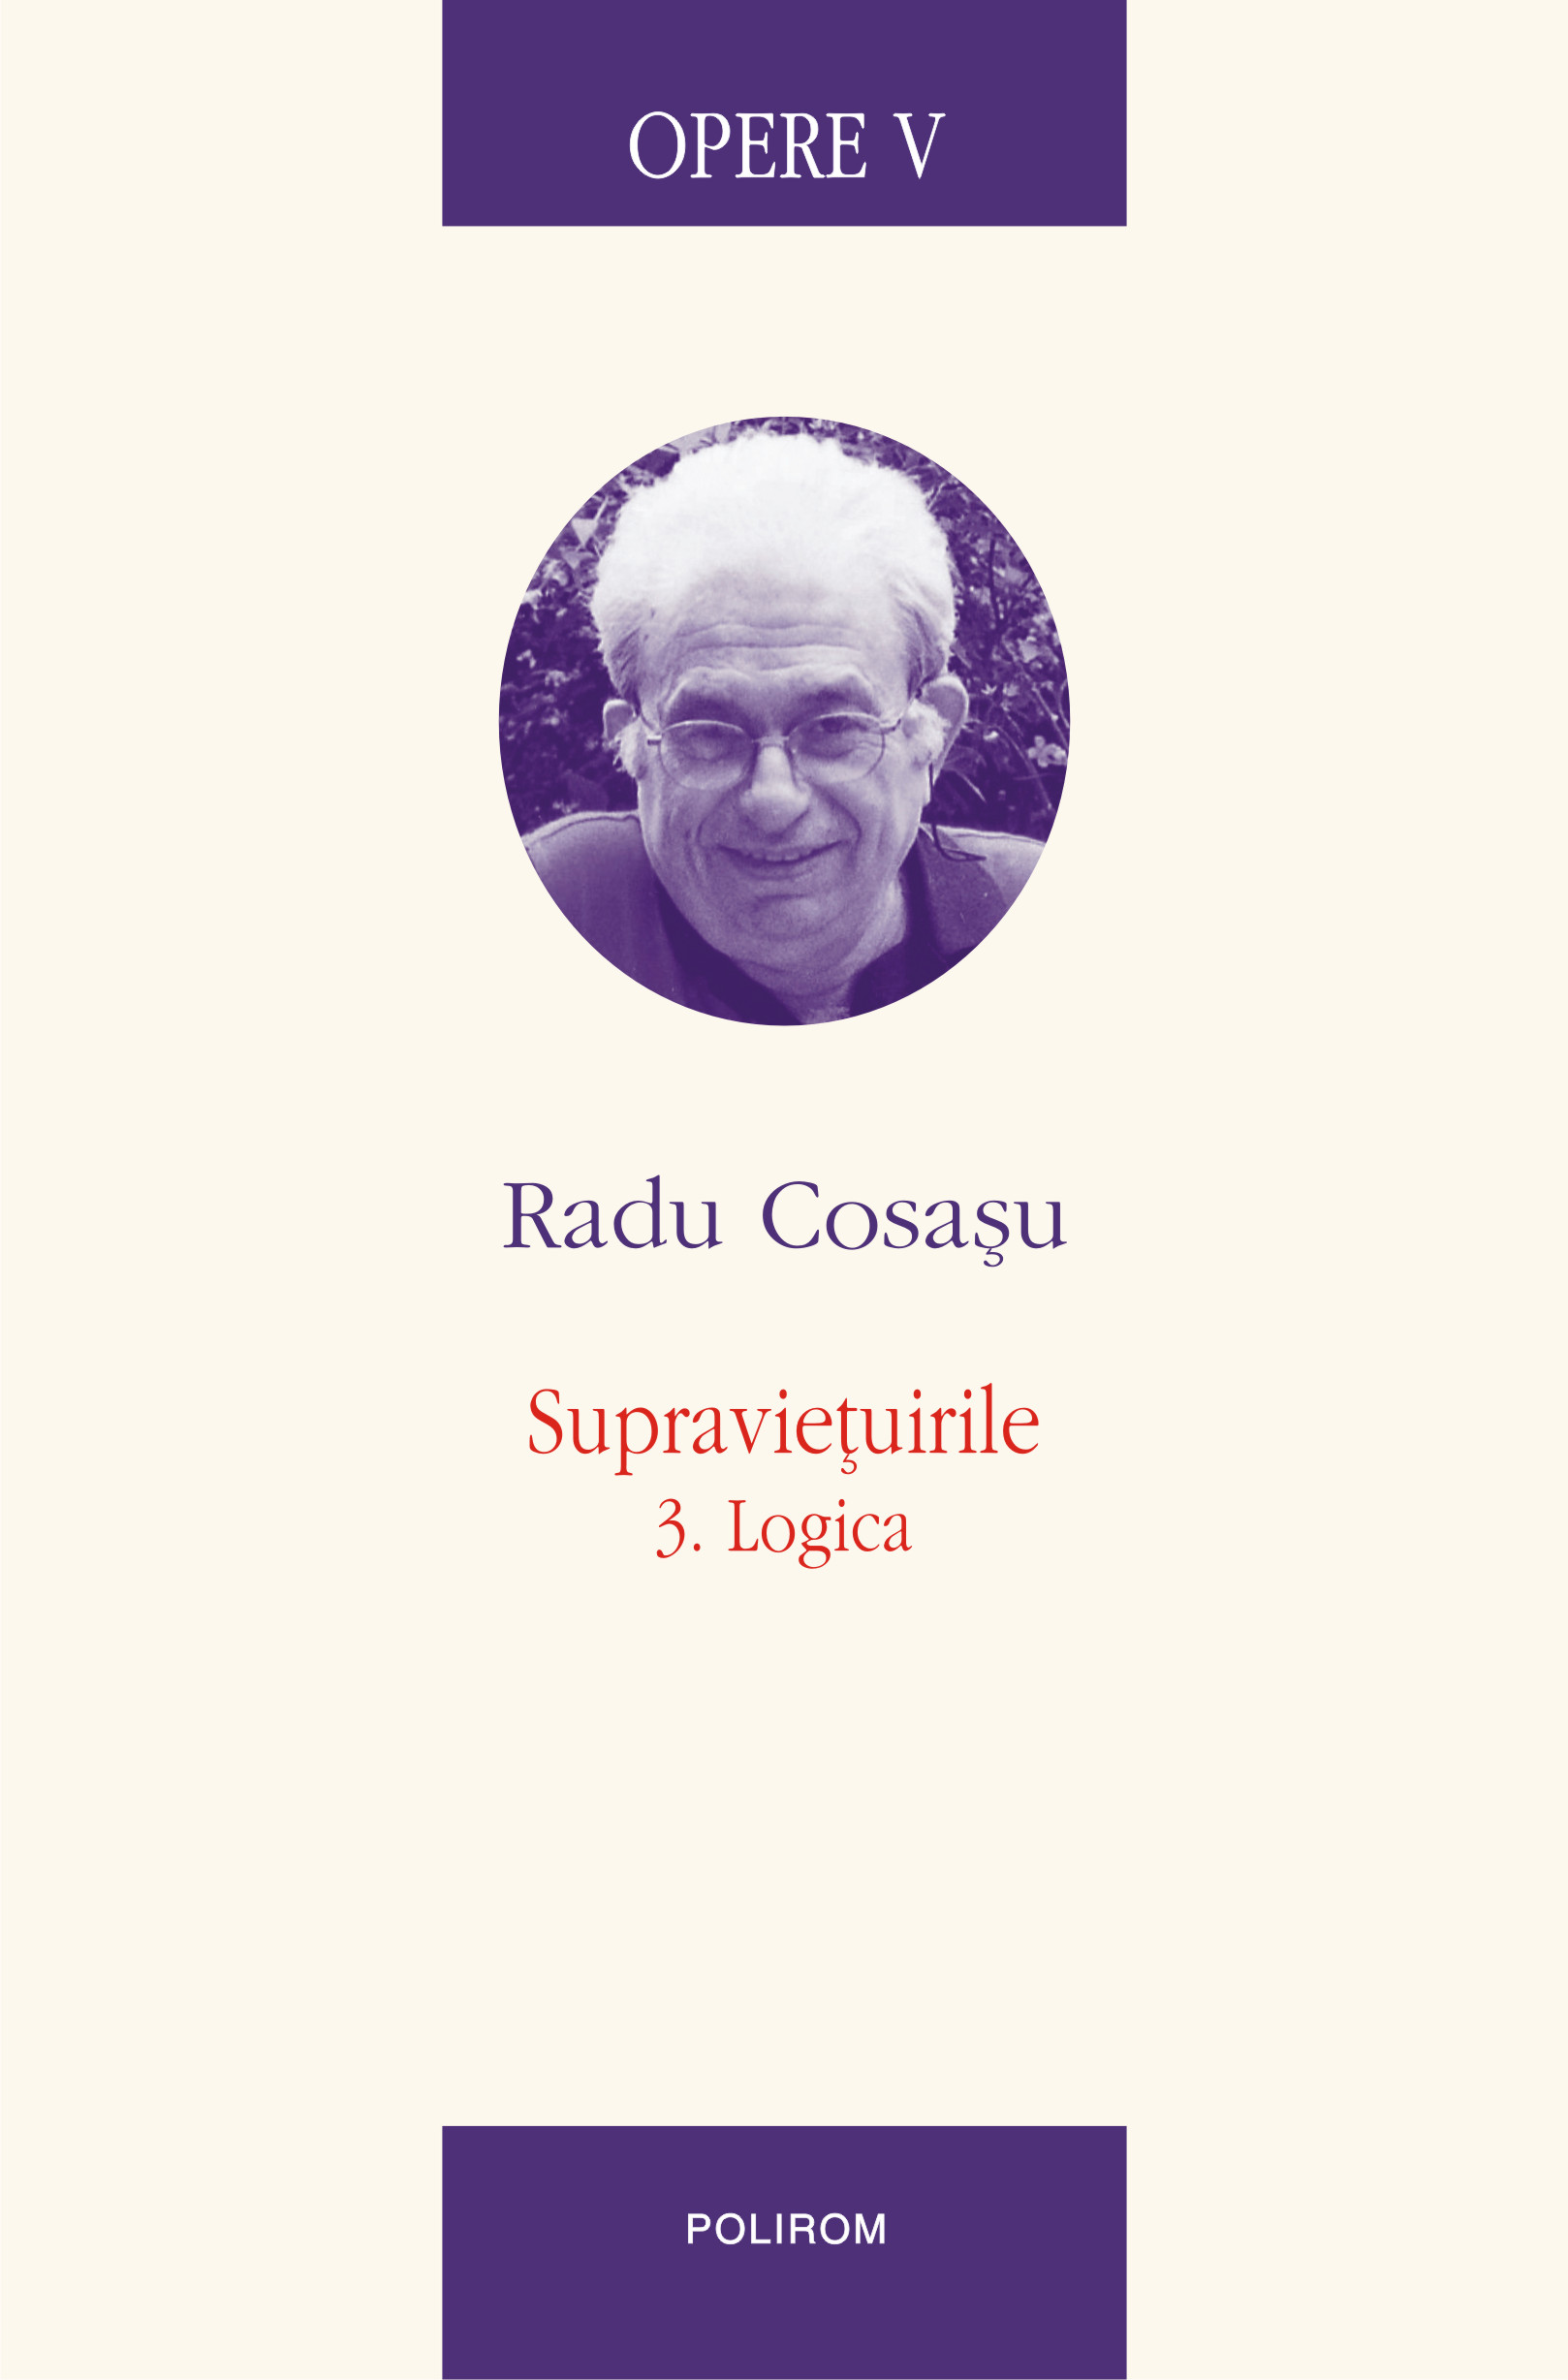 eBook Opere V. Supravietuirile. 3. Logica - Radu Cosasu